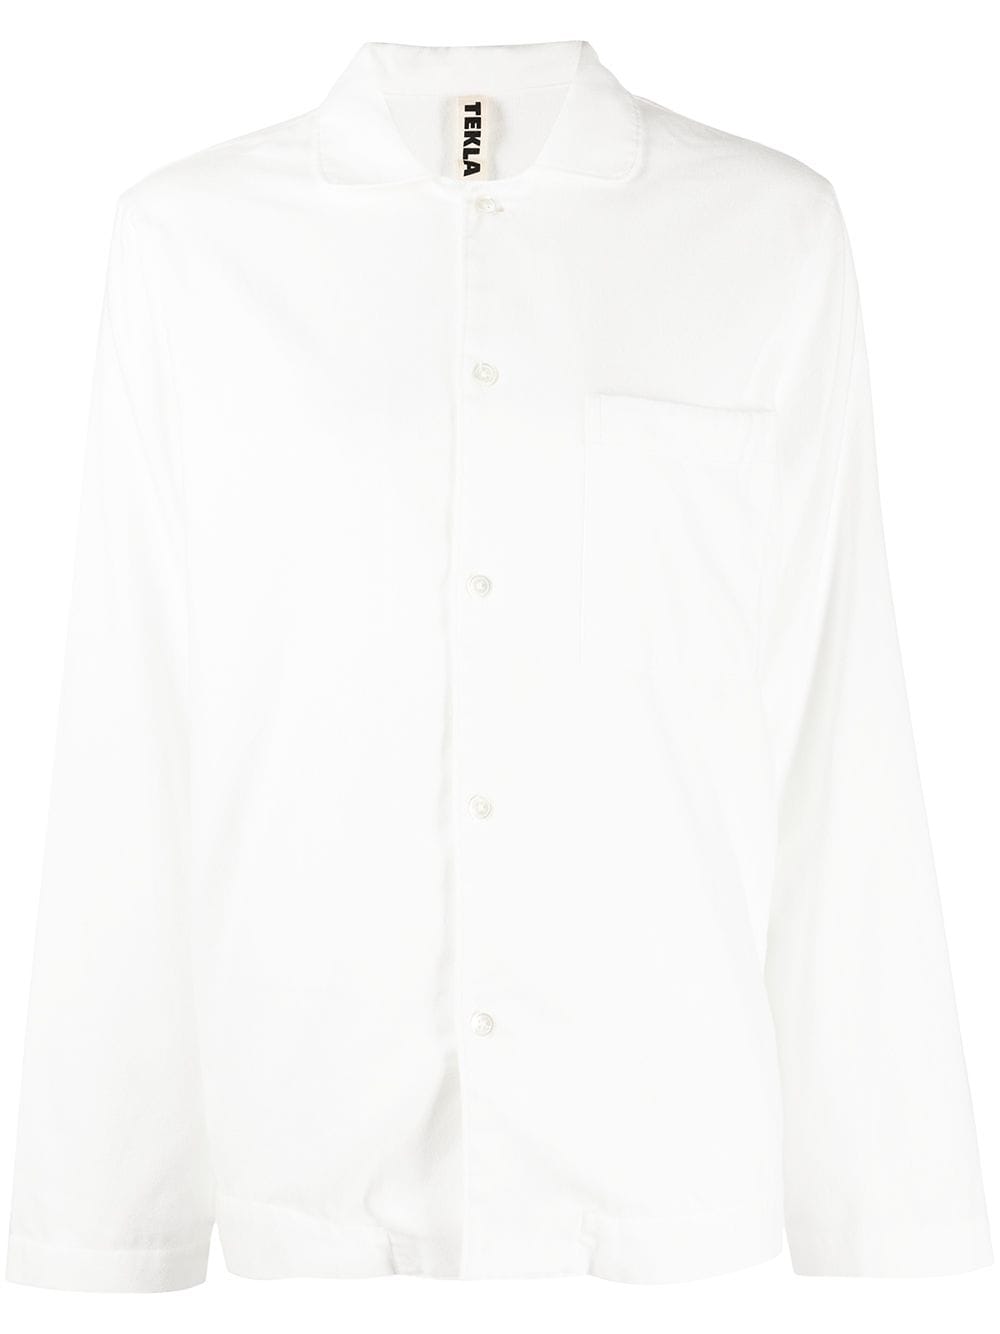 TEKLA organic cotton pajama top - White von TEKLA